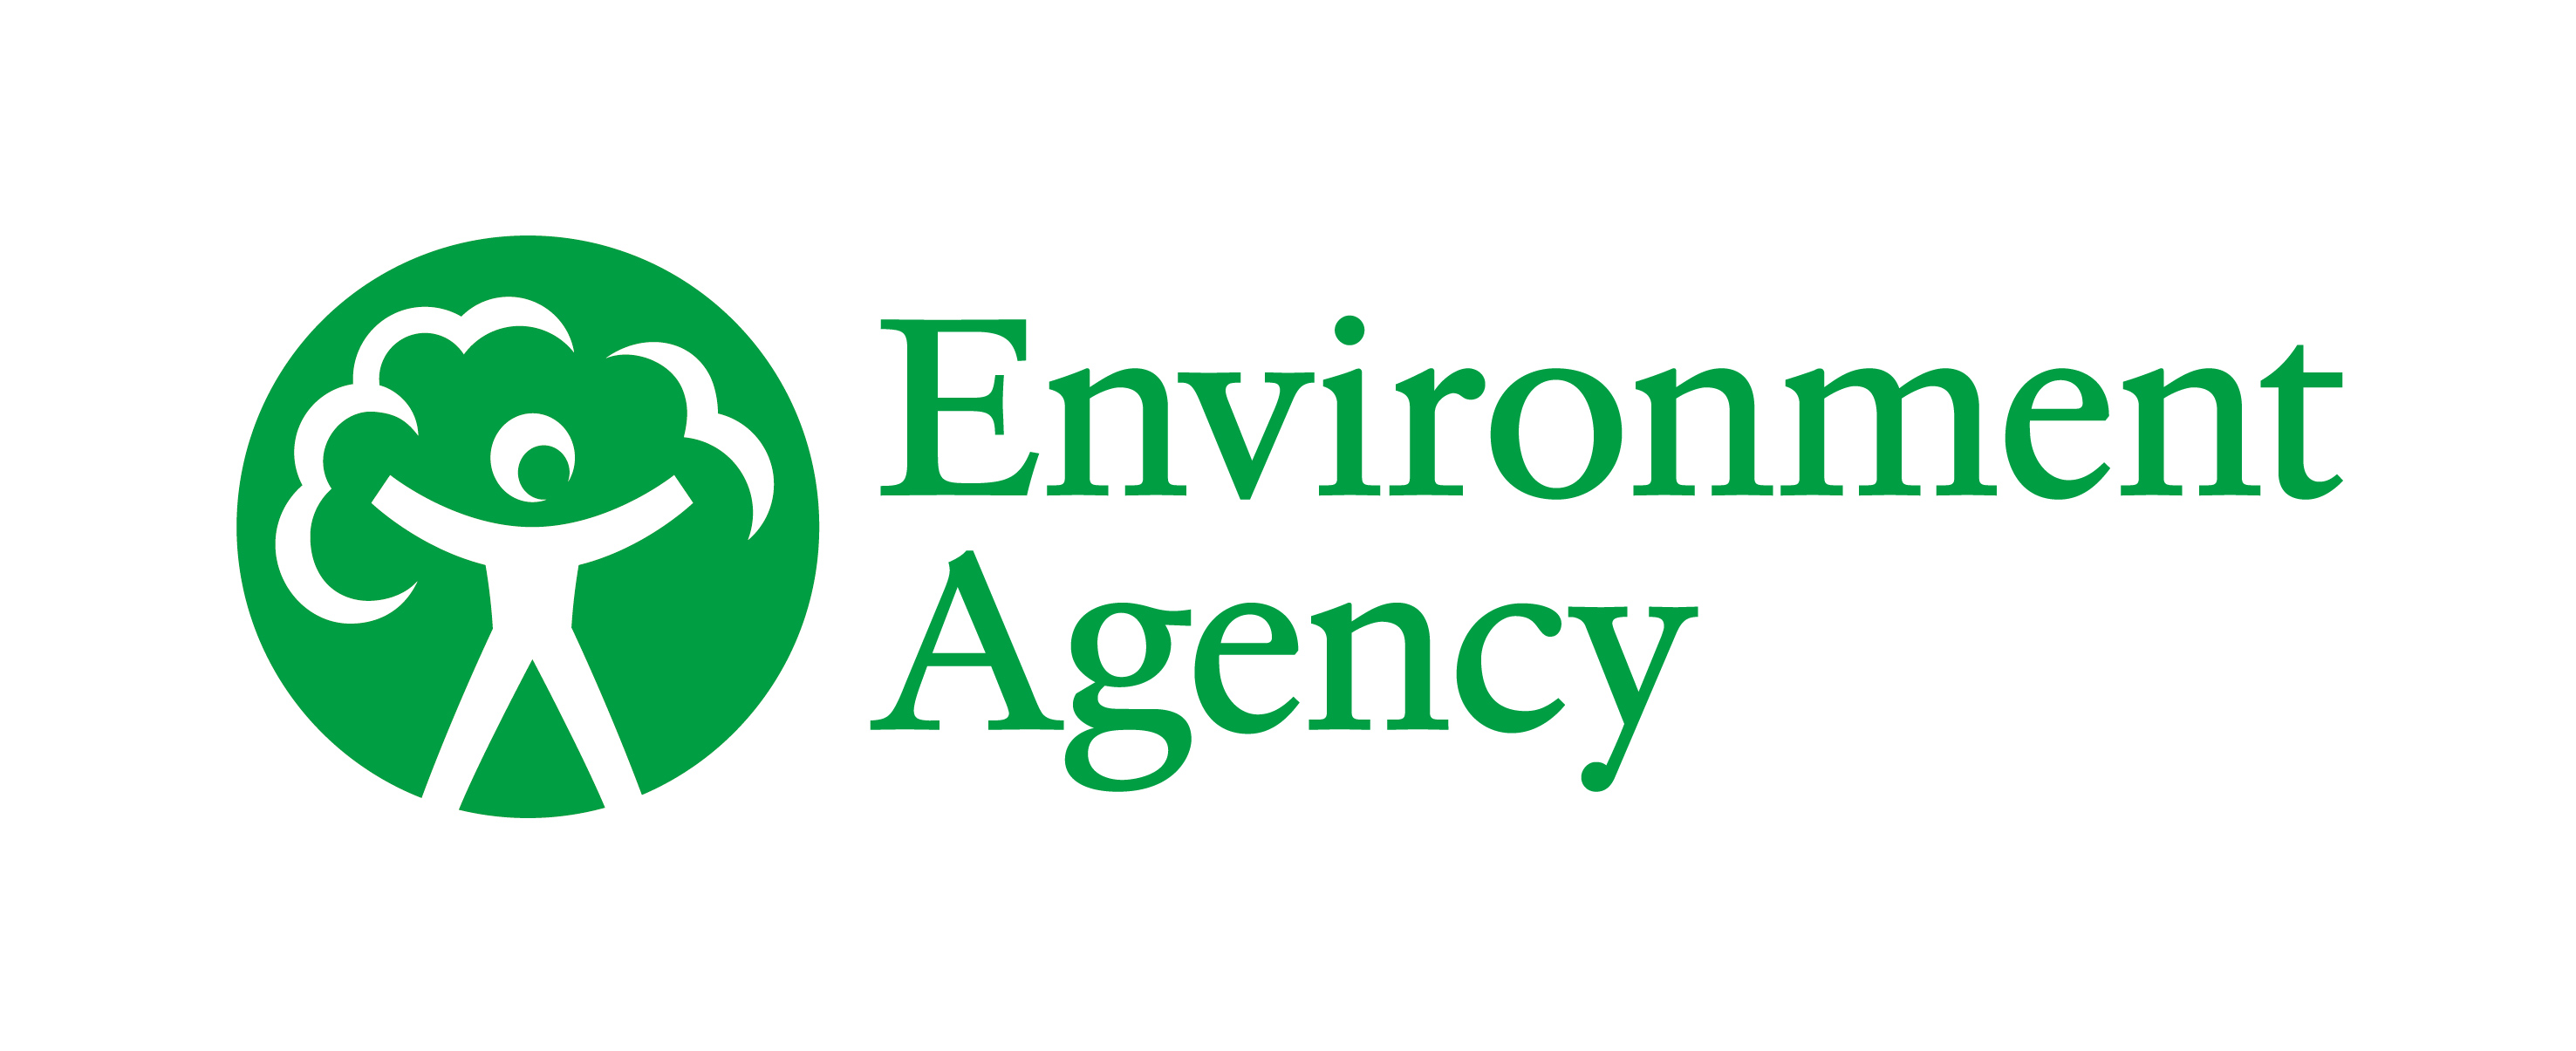 Environment agency jobs exeter local corpus christi jobs